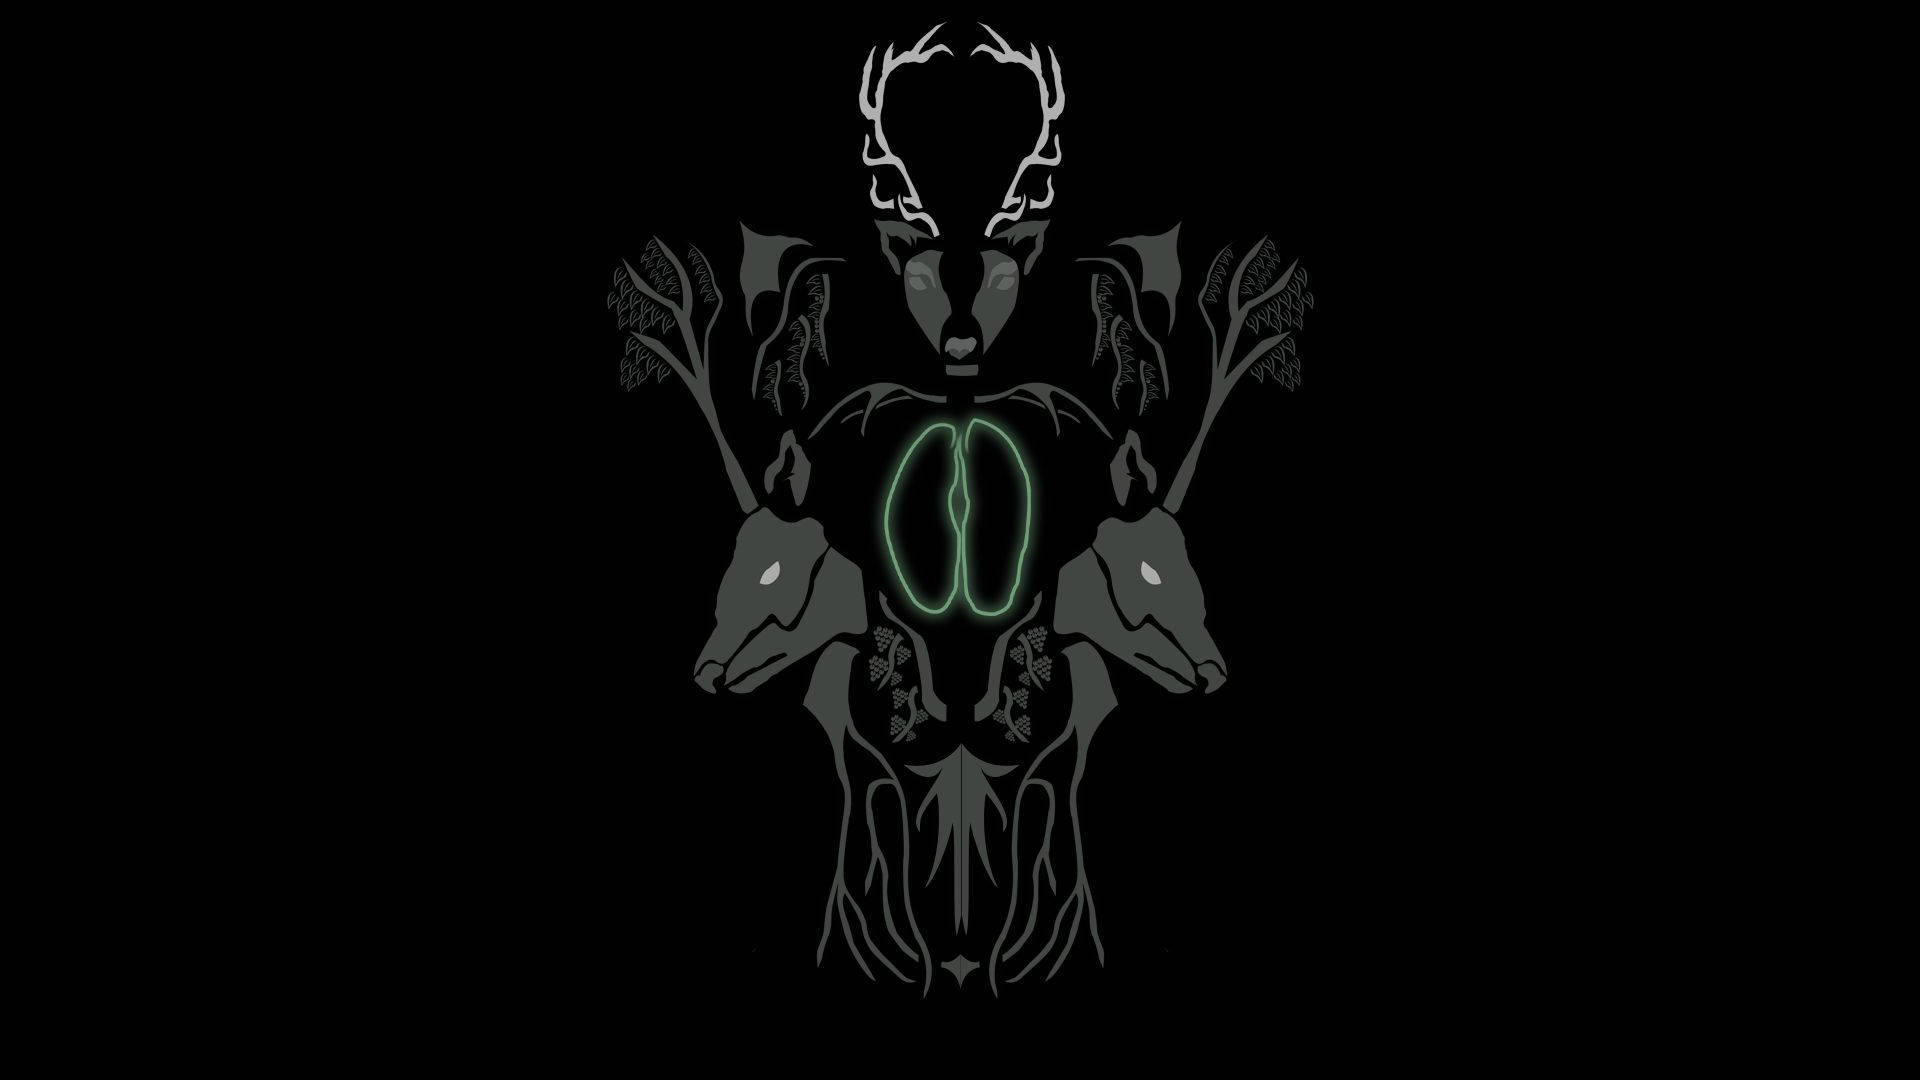 The Furry Demon Symbol Background